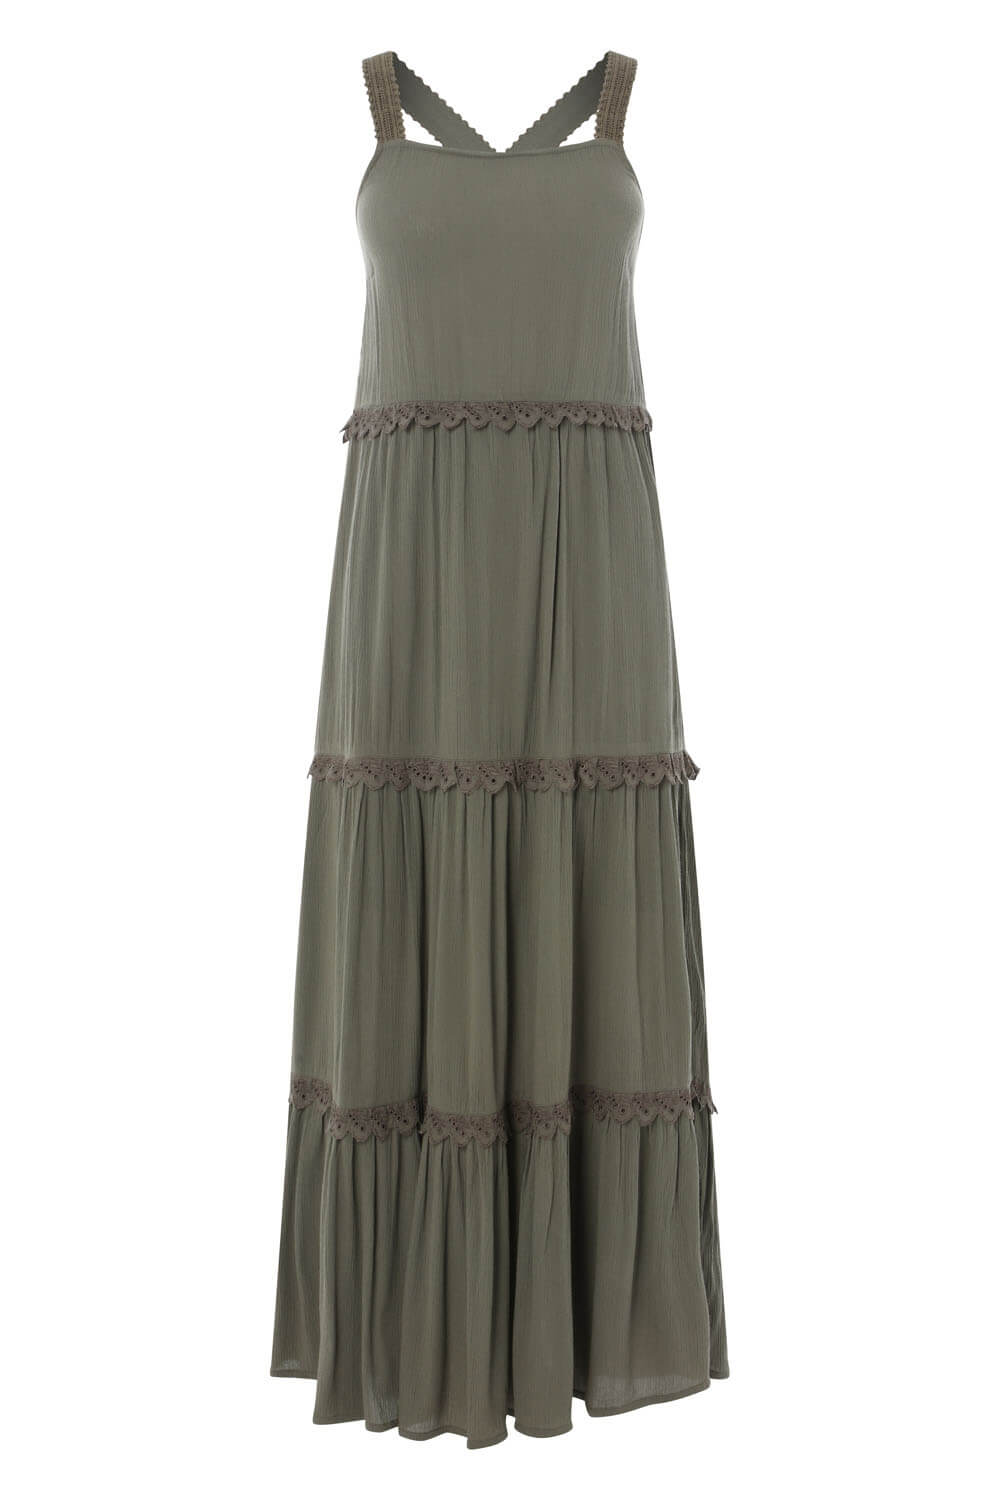 Tiered Lace Trim Maxi Dress in Khaki - Roman Originals UK